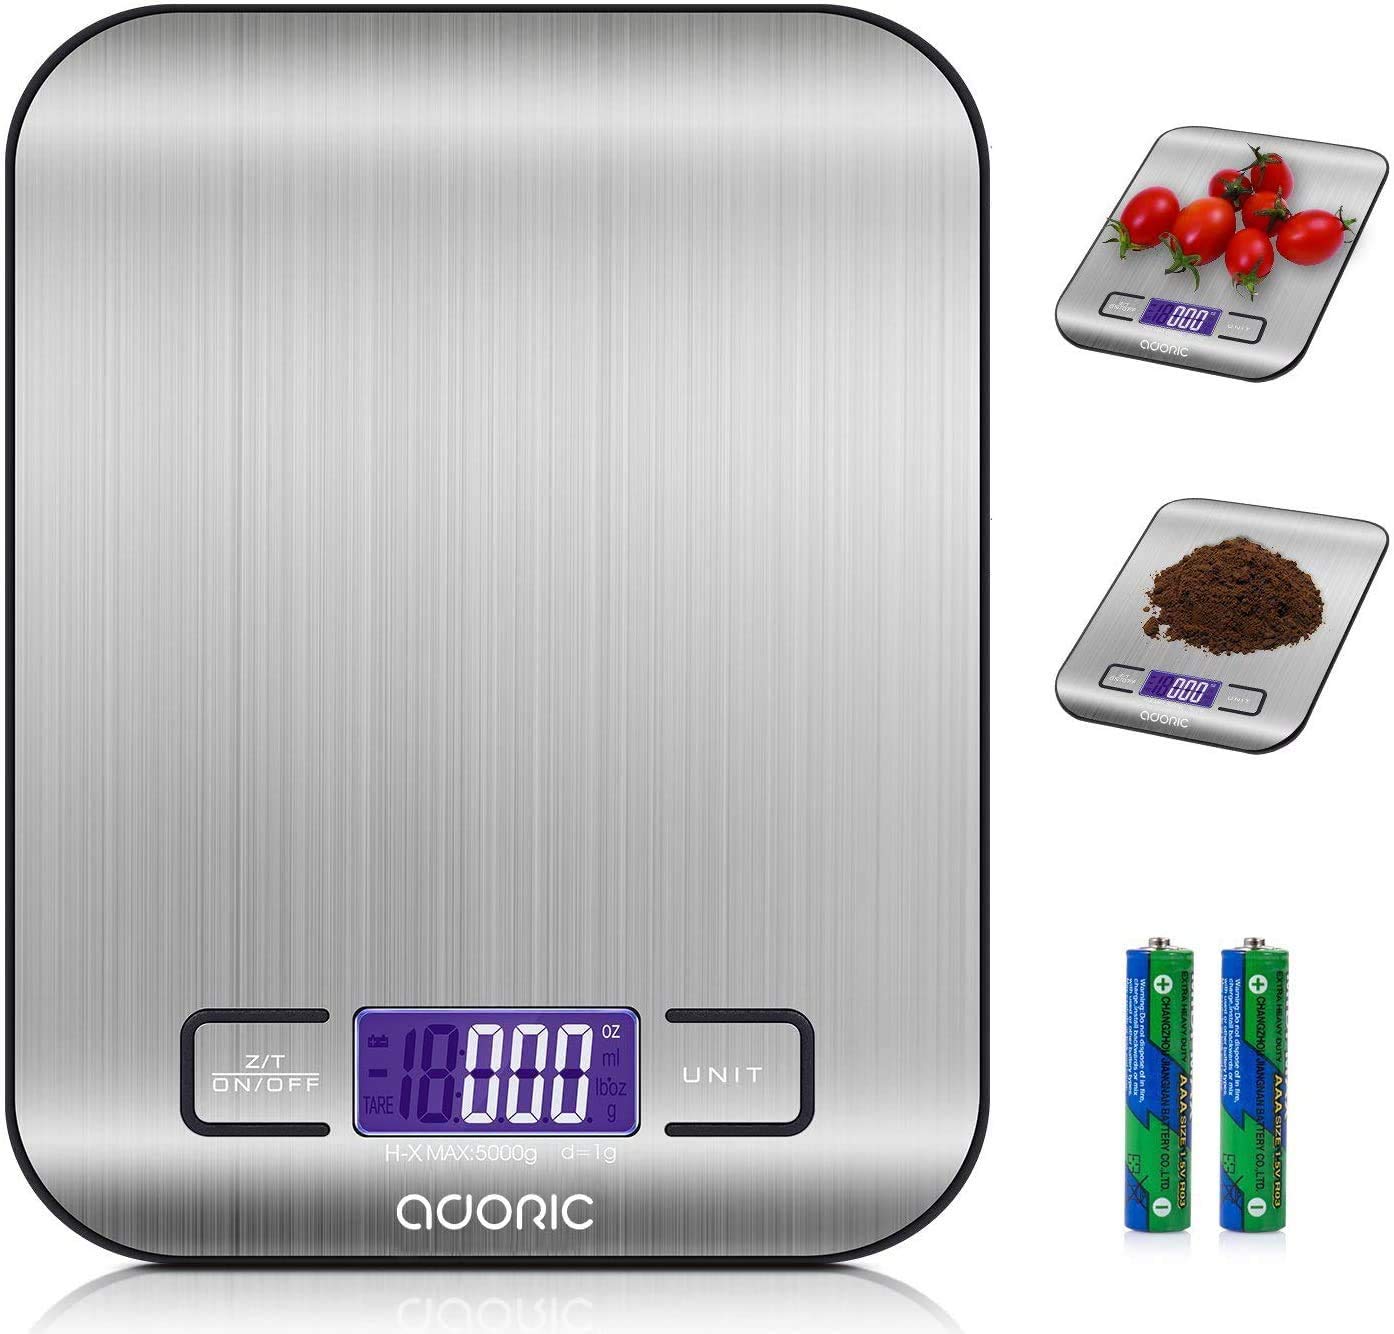 ADORIC Kitchen Scales